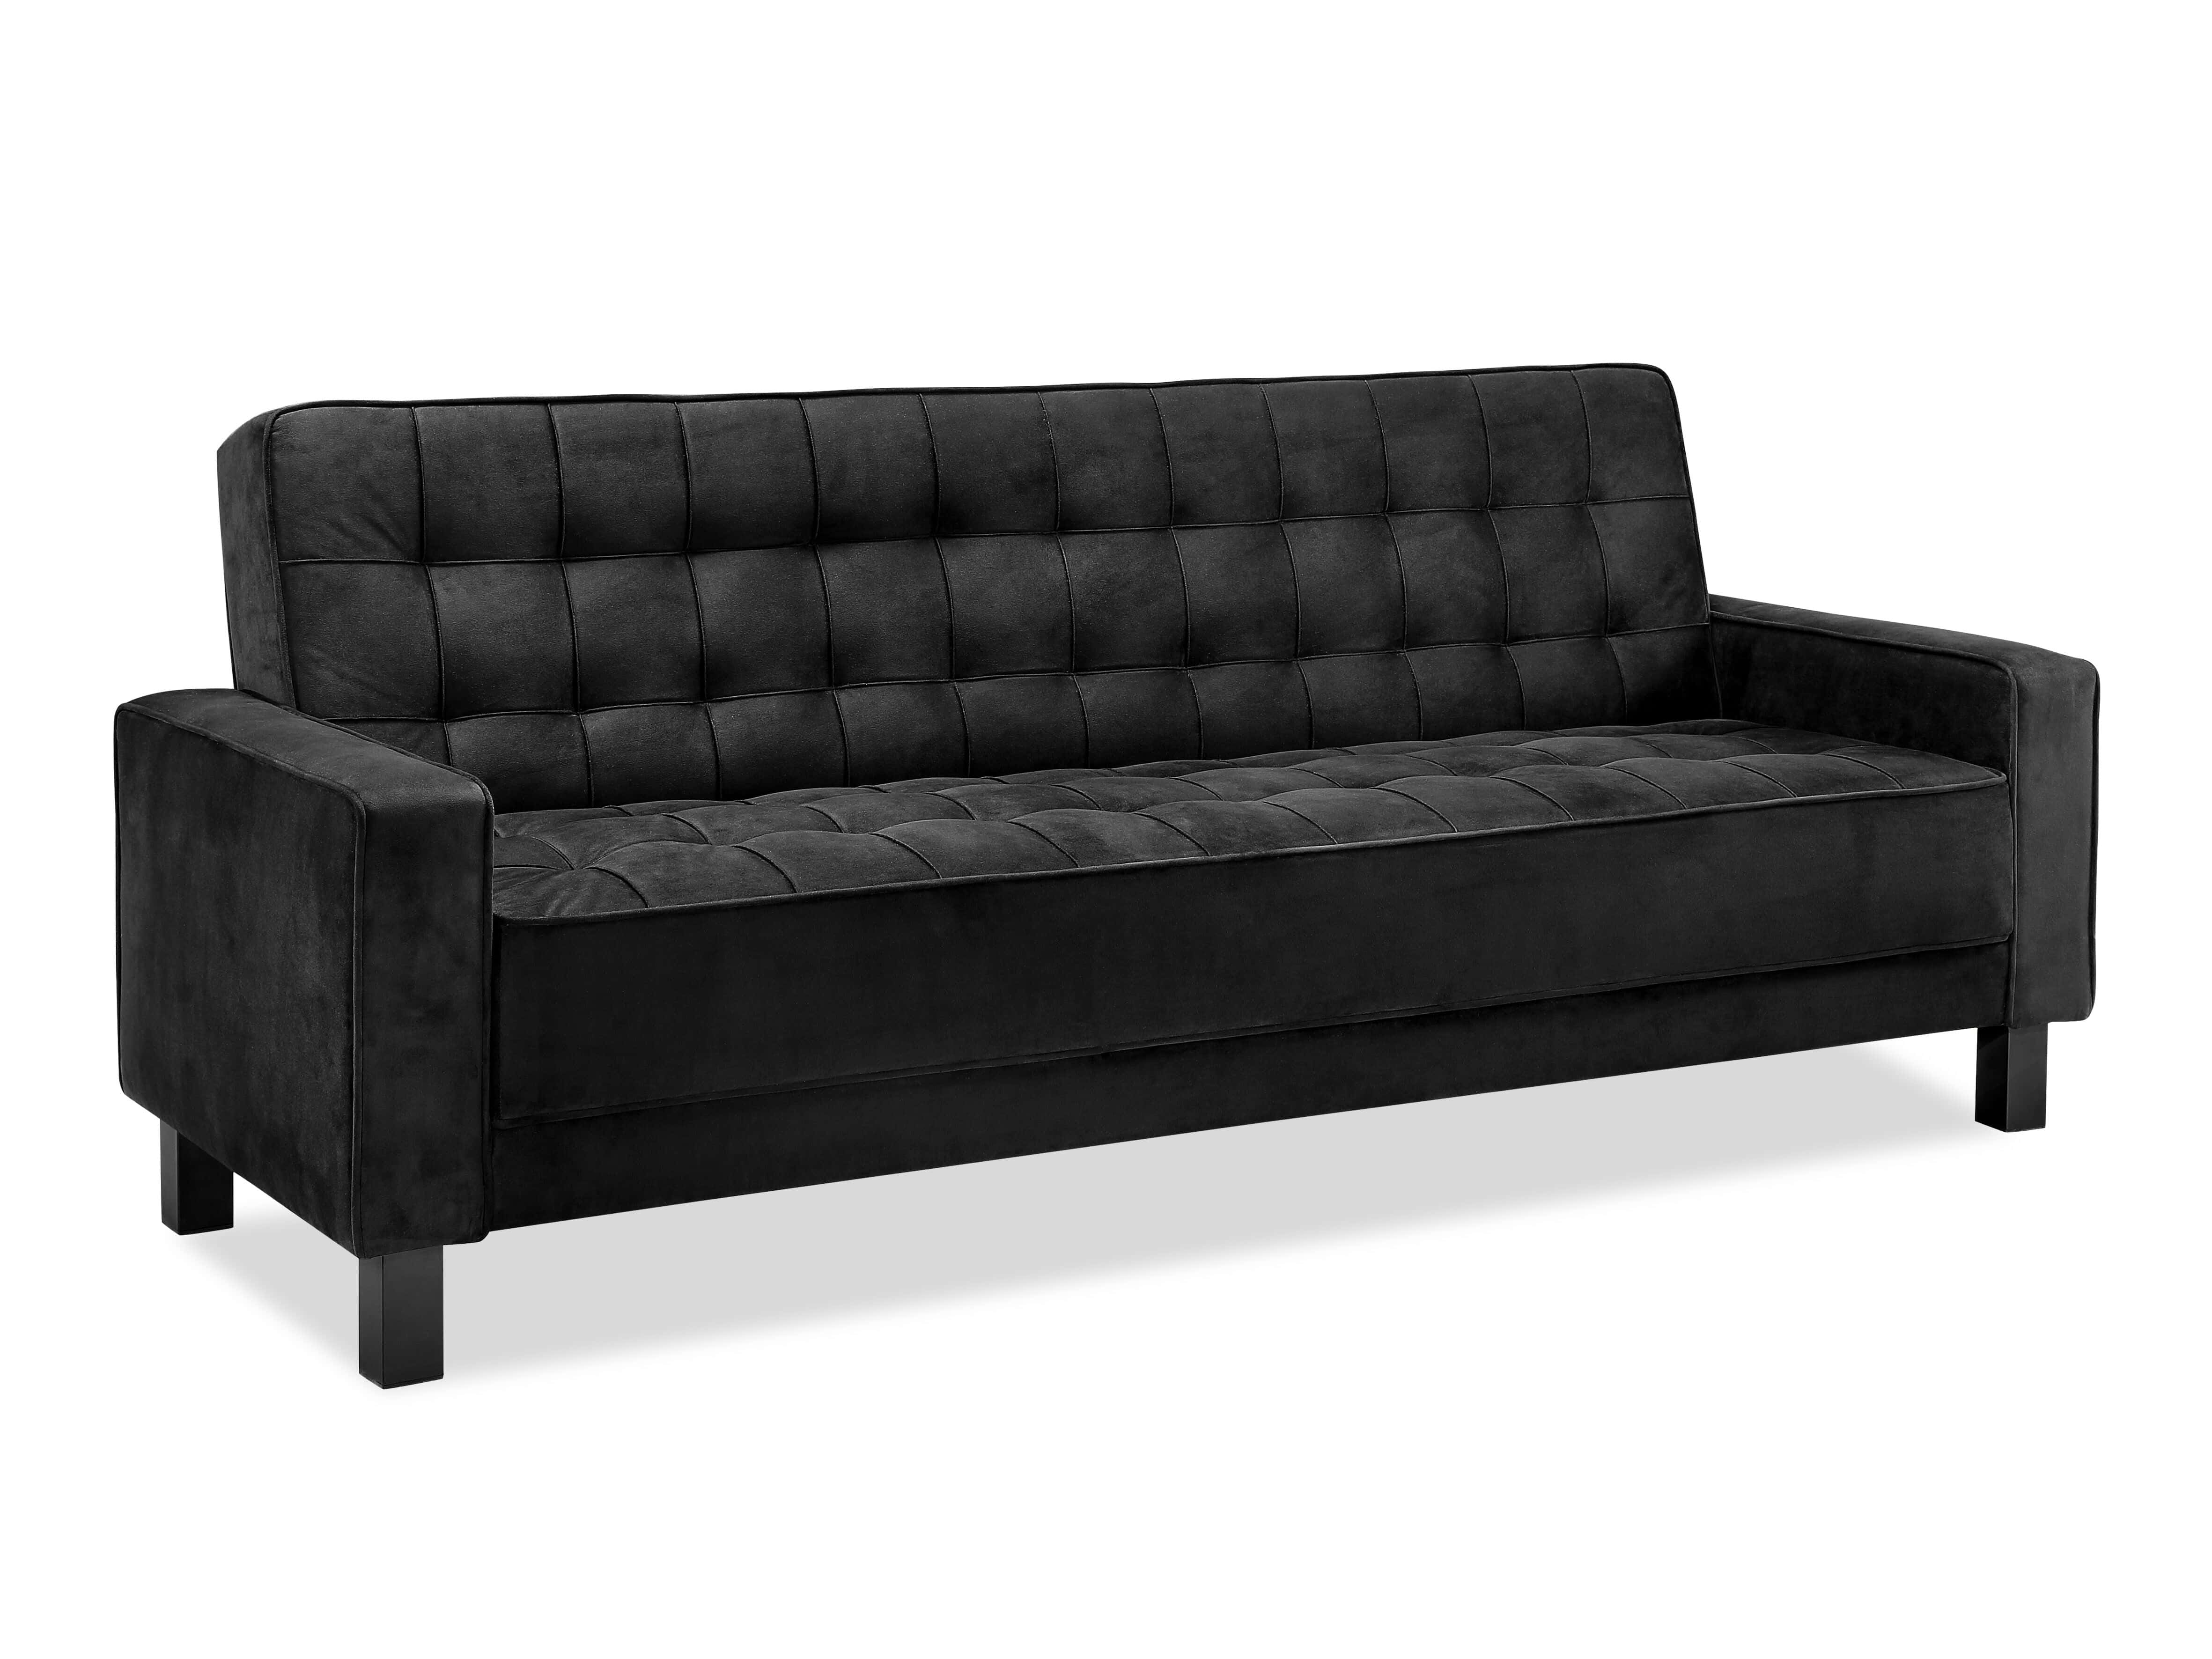 McKinley Convertible Sofa Black by Serta Lifestyle